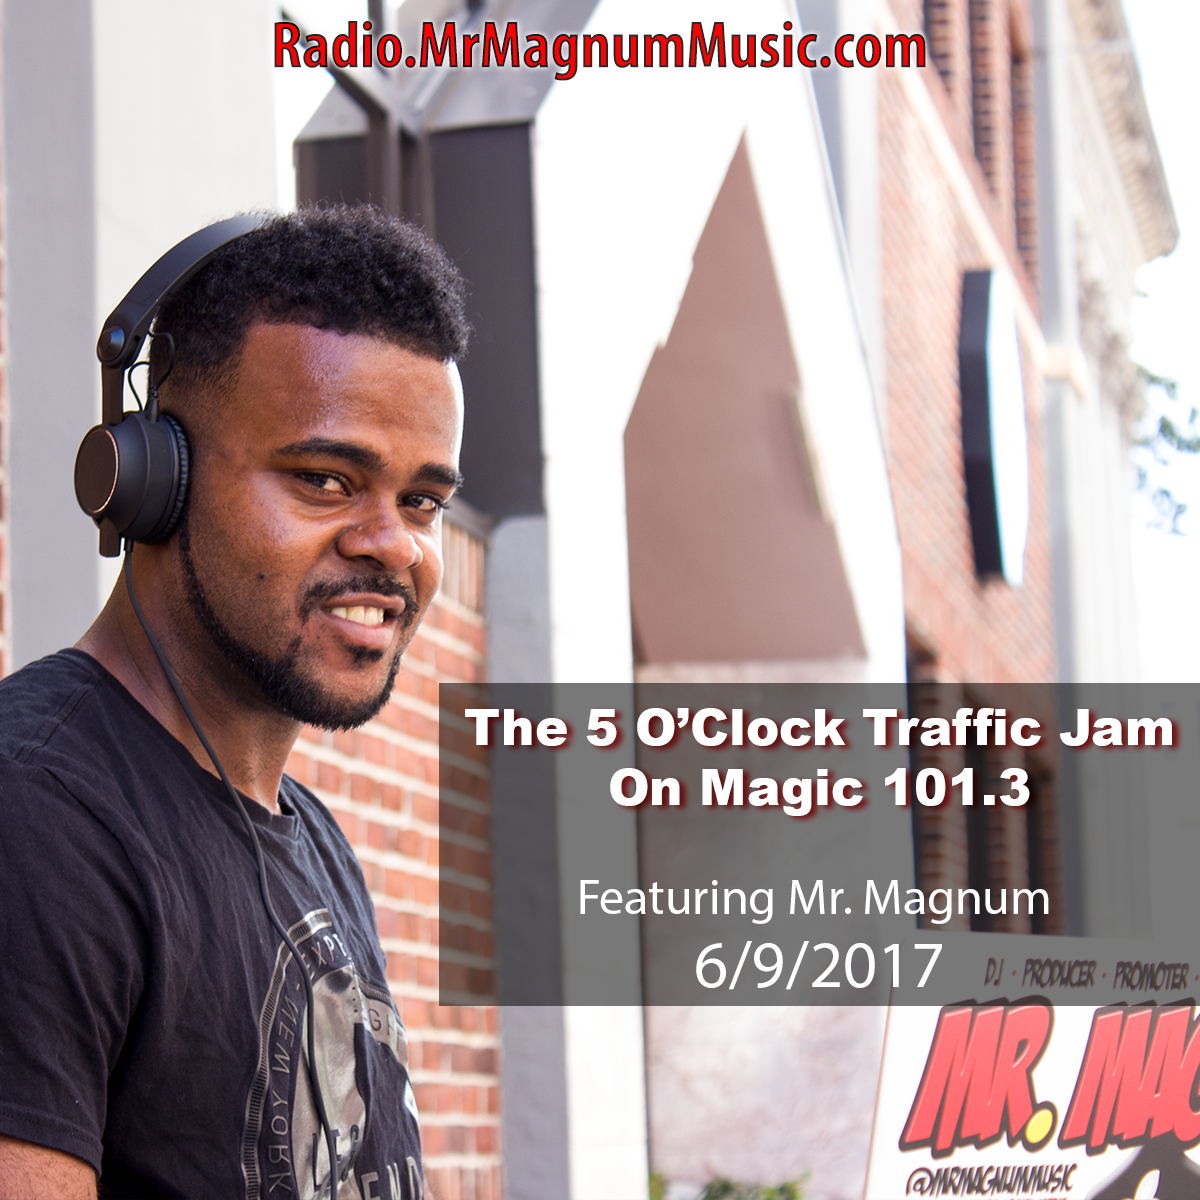 The 5 O'Clock Traffic Jam 20170609 featuring Gainesville's #1 DJ, Mr. Magnum on Magic 101.3